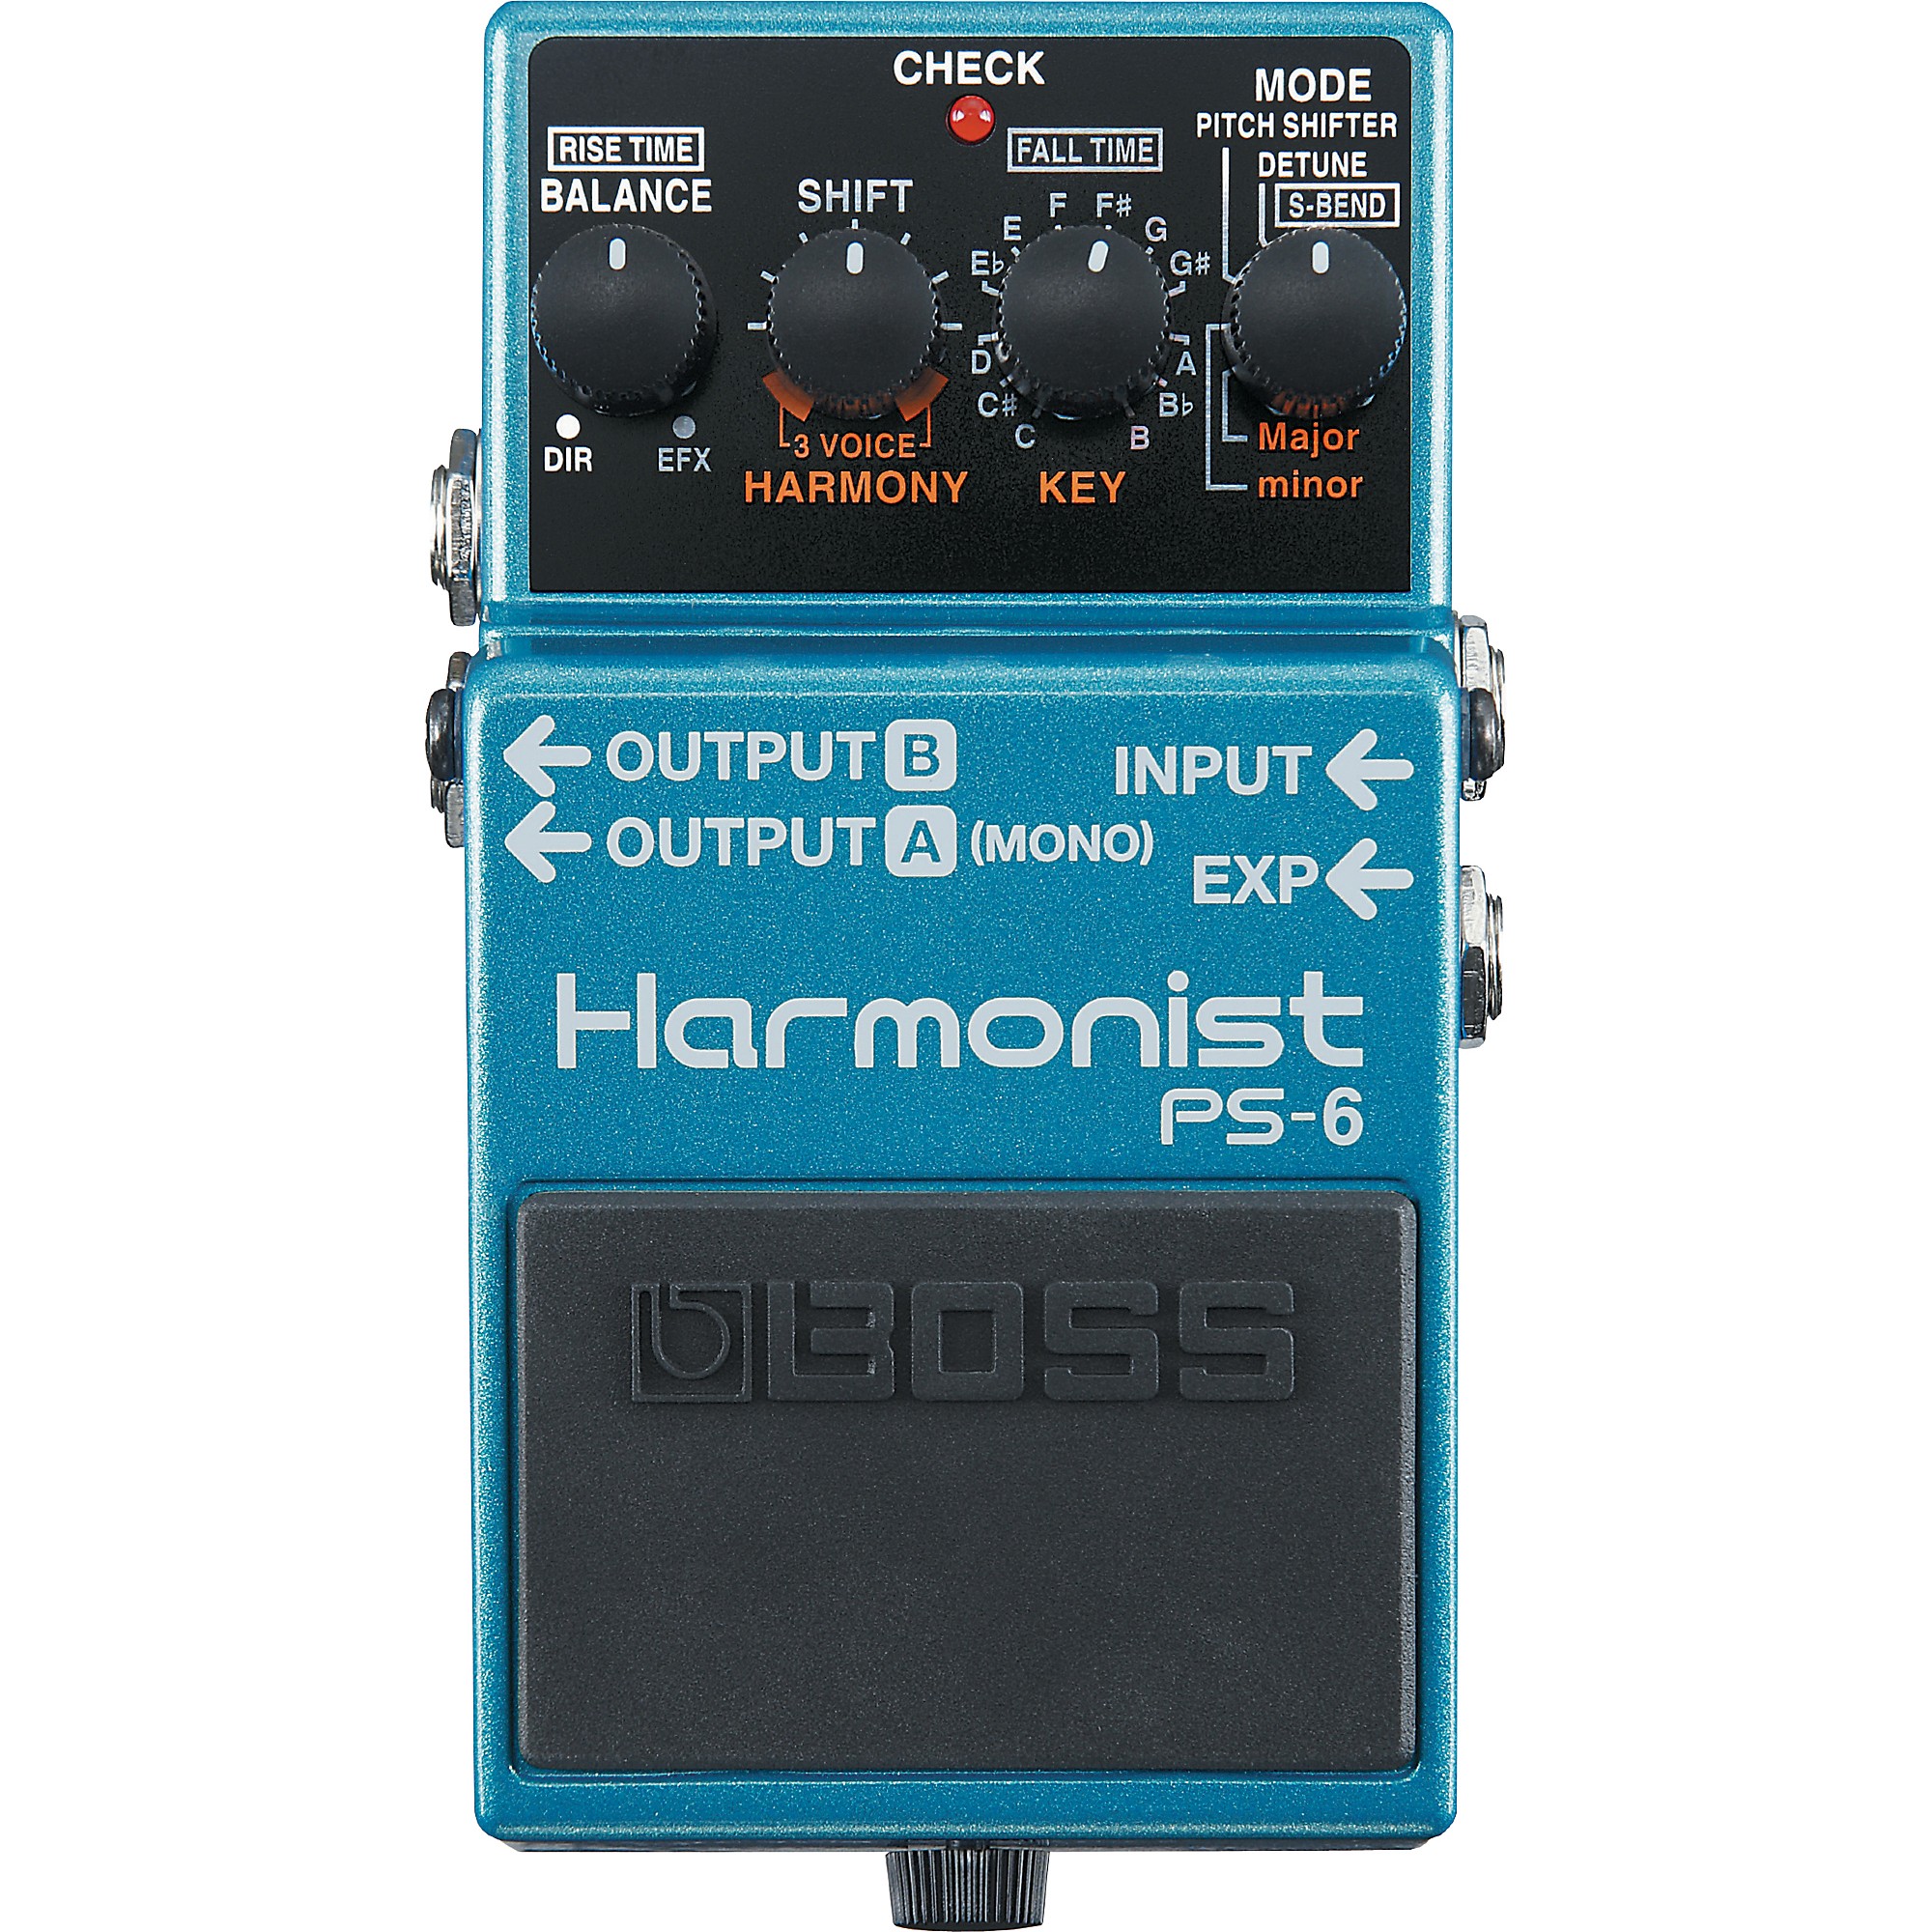 BOSS PS-6 Harmonist Pitch Shifter Guitar Effects Pedal | Guitar Center